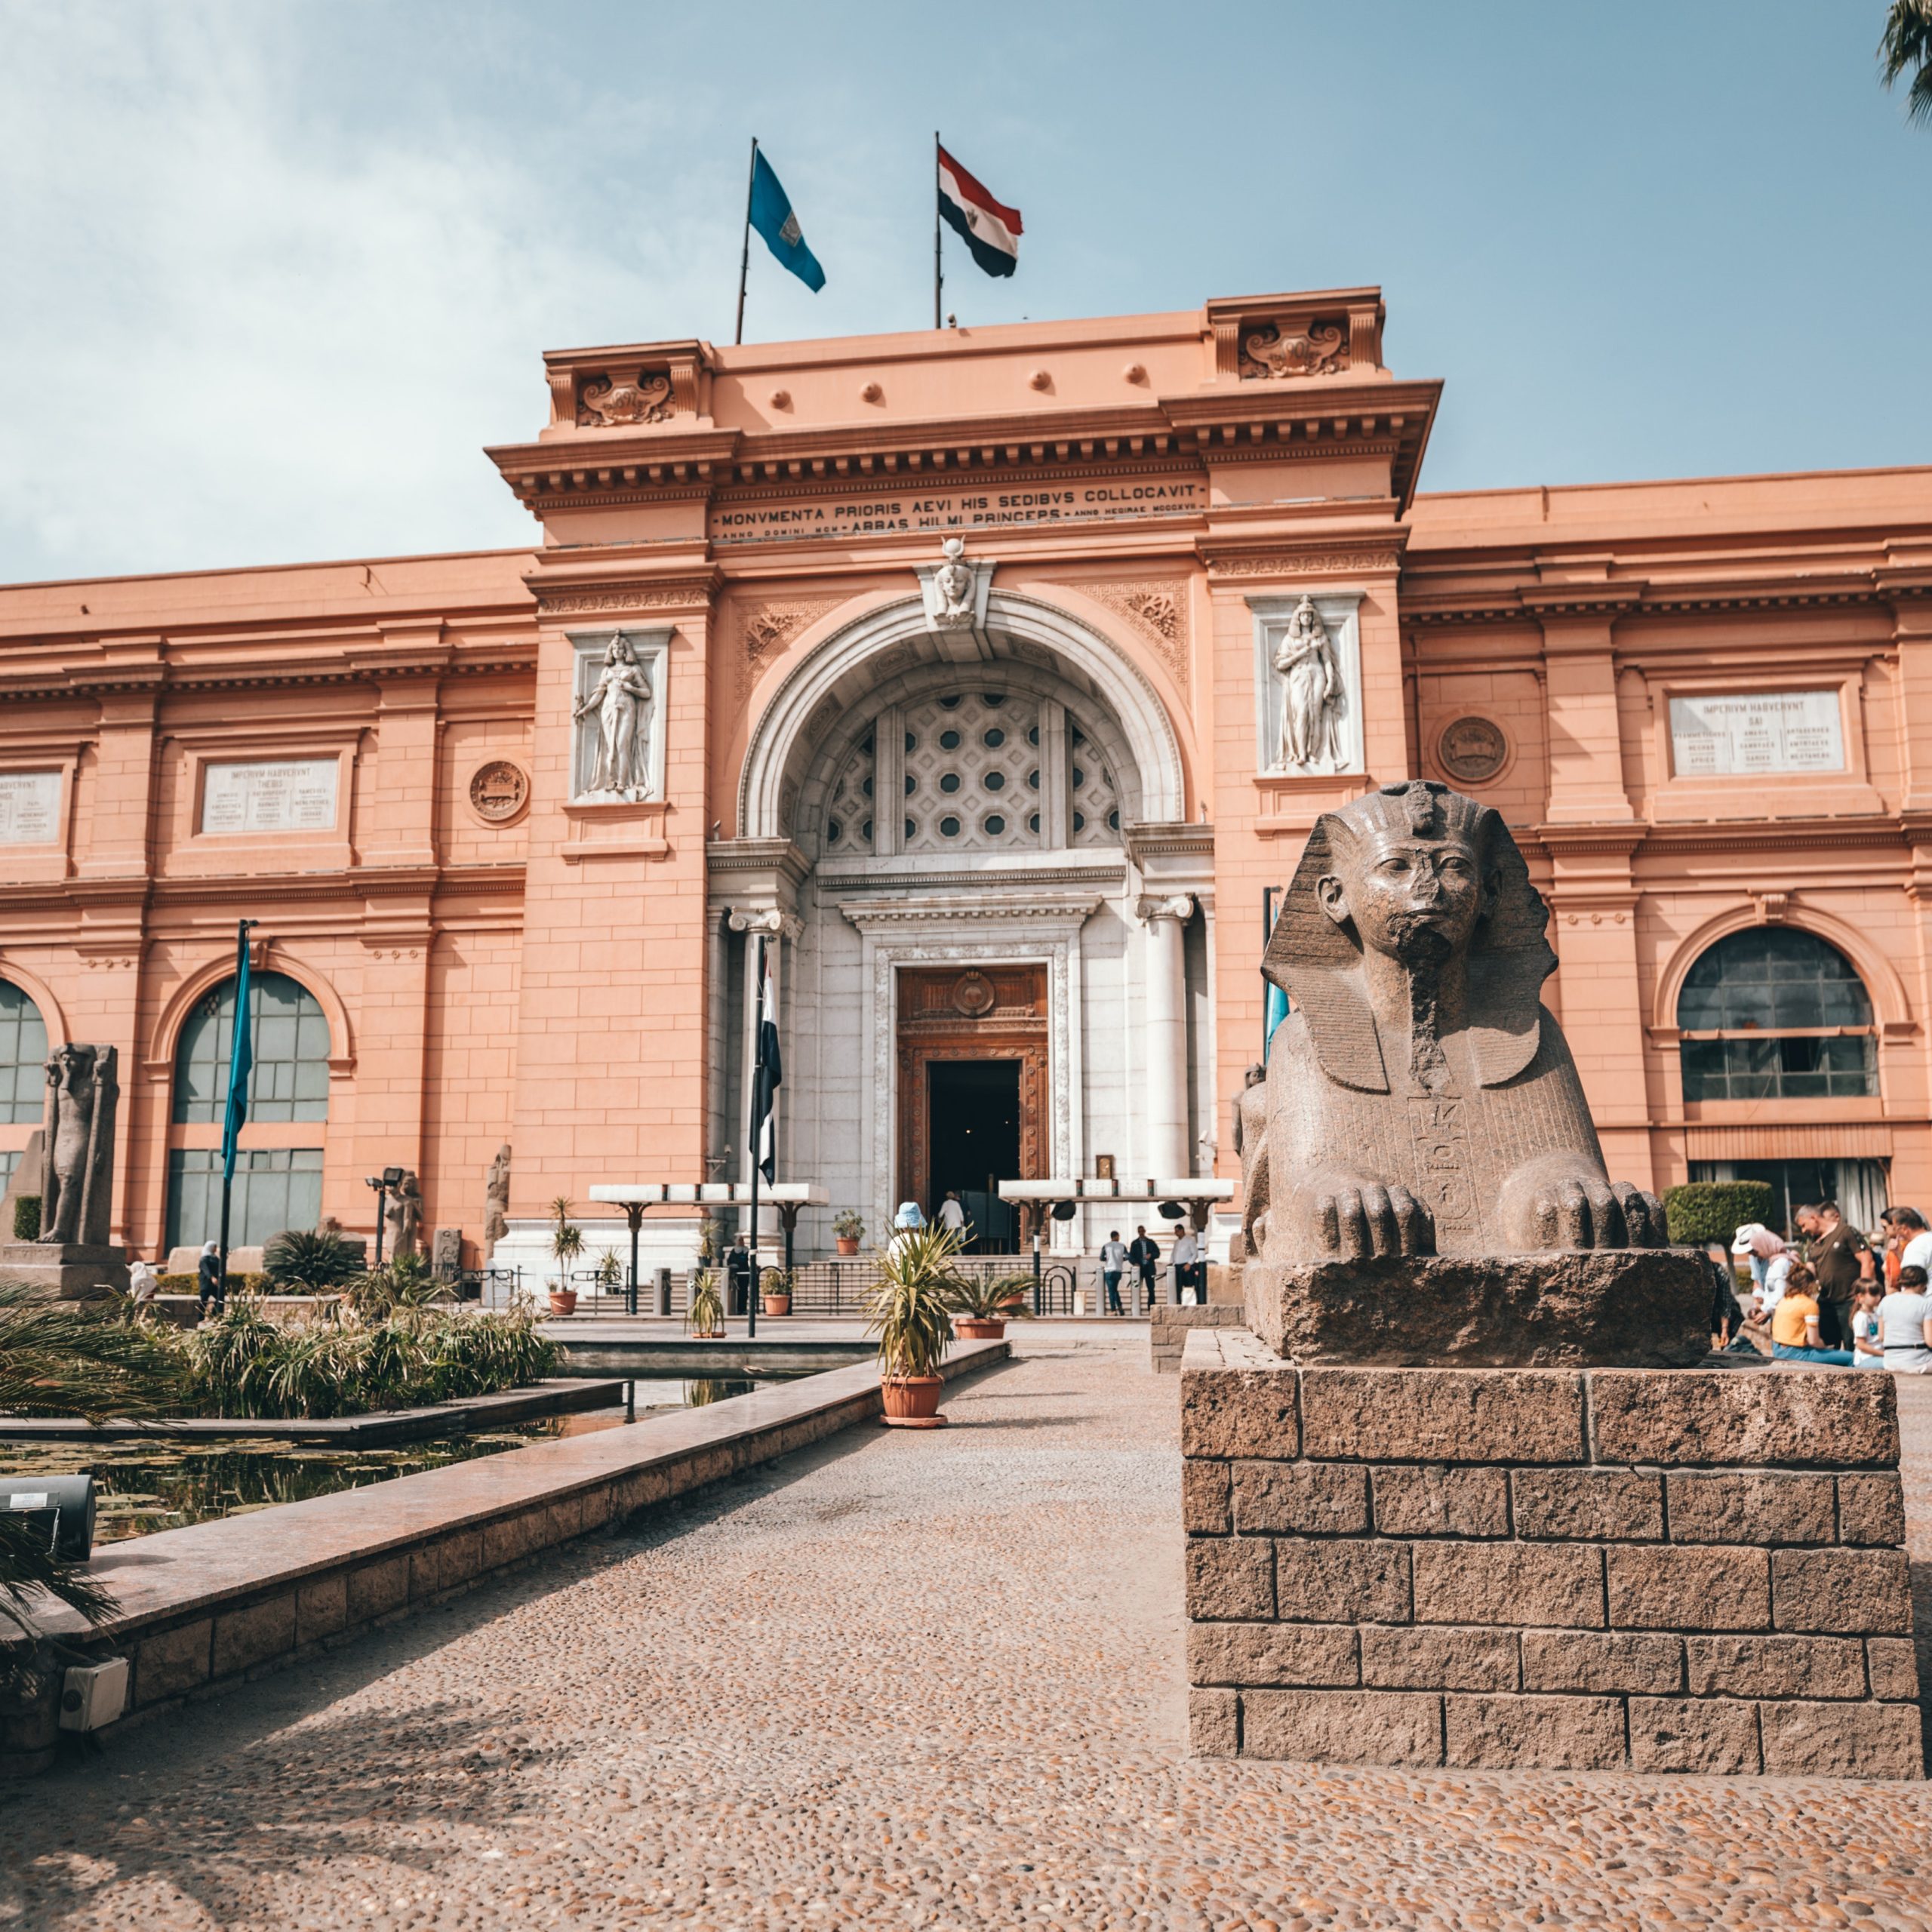 Stop A: The Museum of Egyptian Antiquities, Midan El Tahrir 